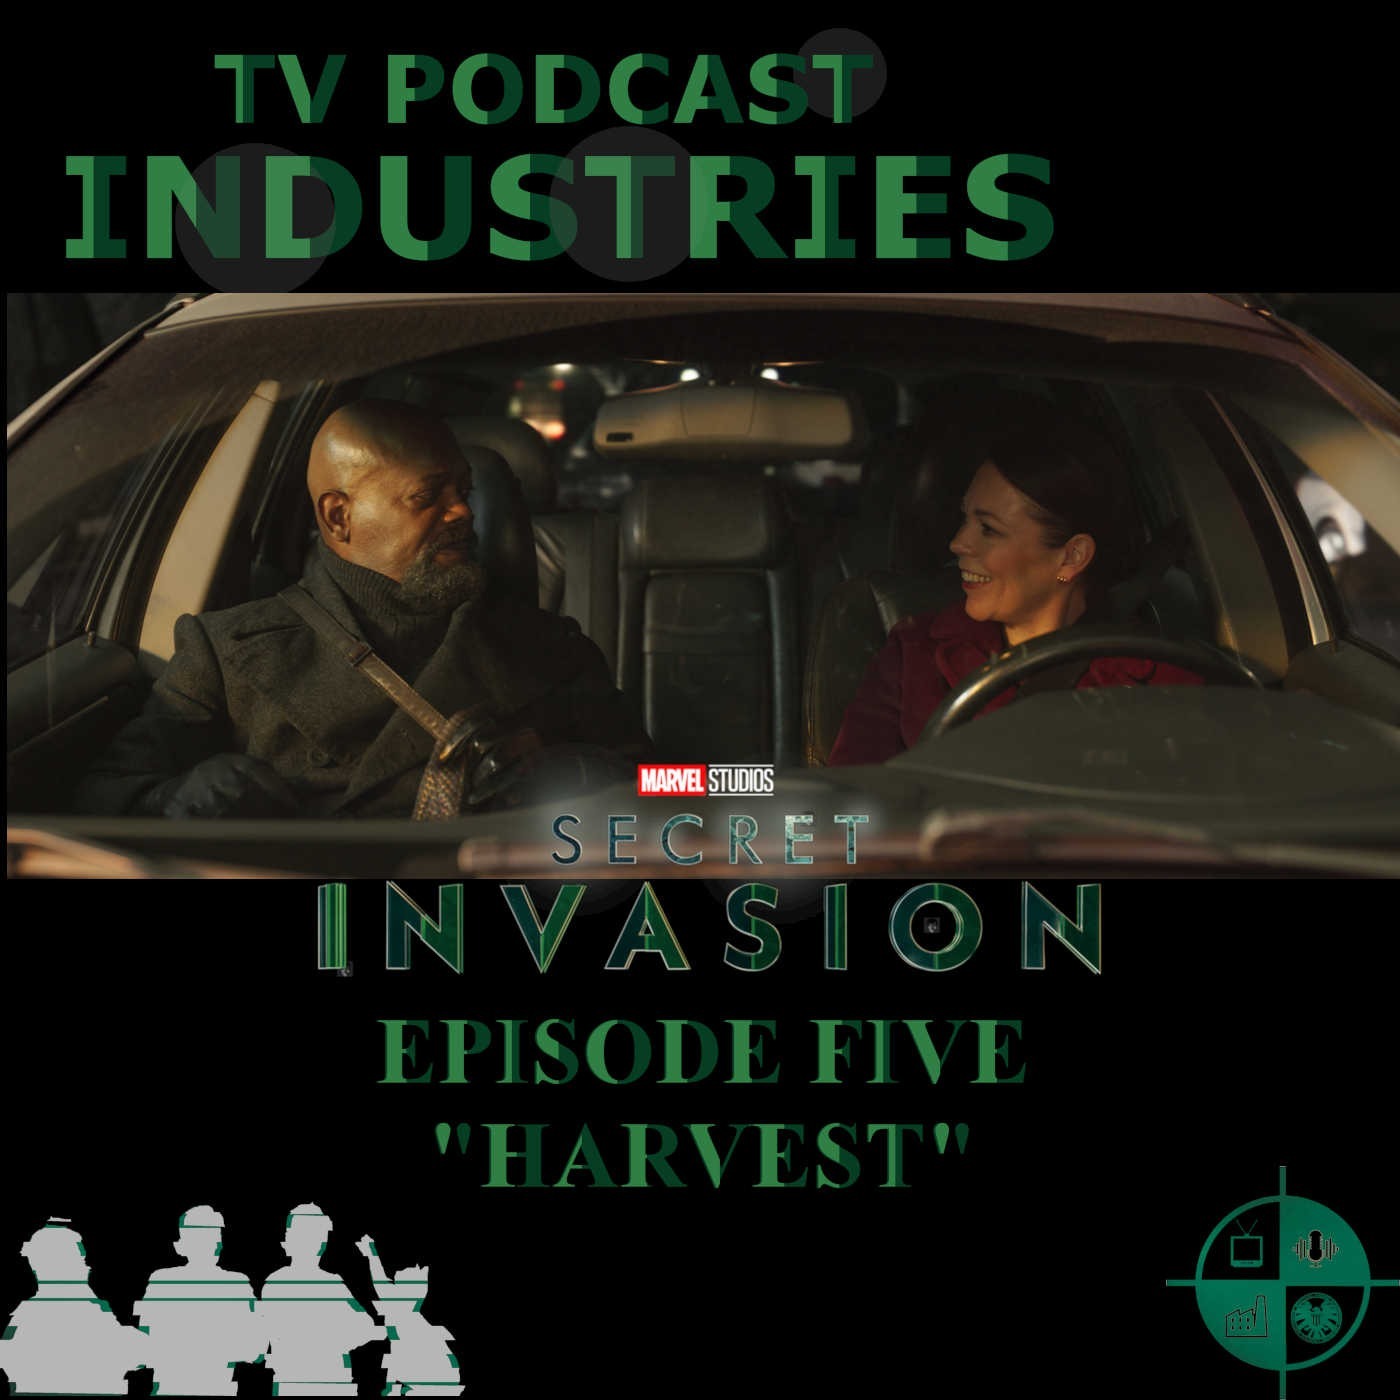 Secret Invasion Episode 5 Review: 'Harvest' Veers into High Camp